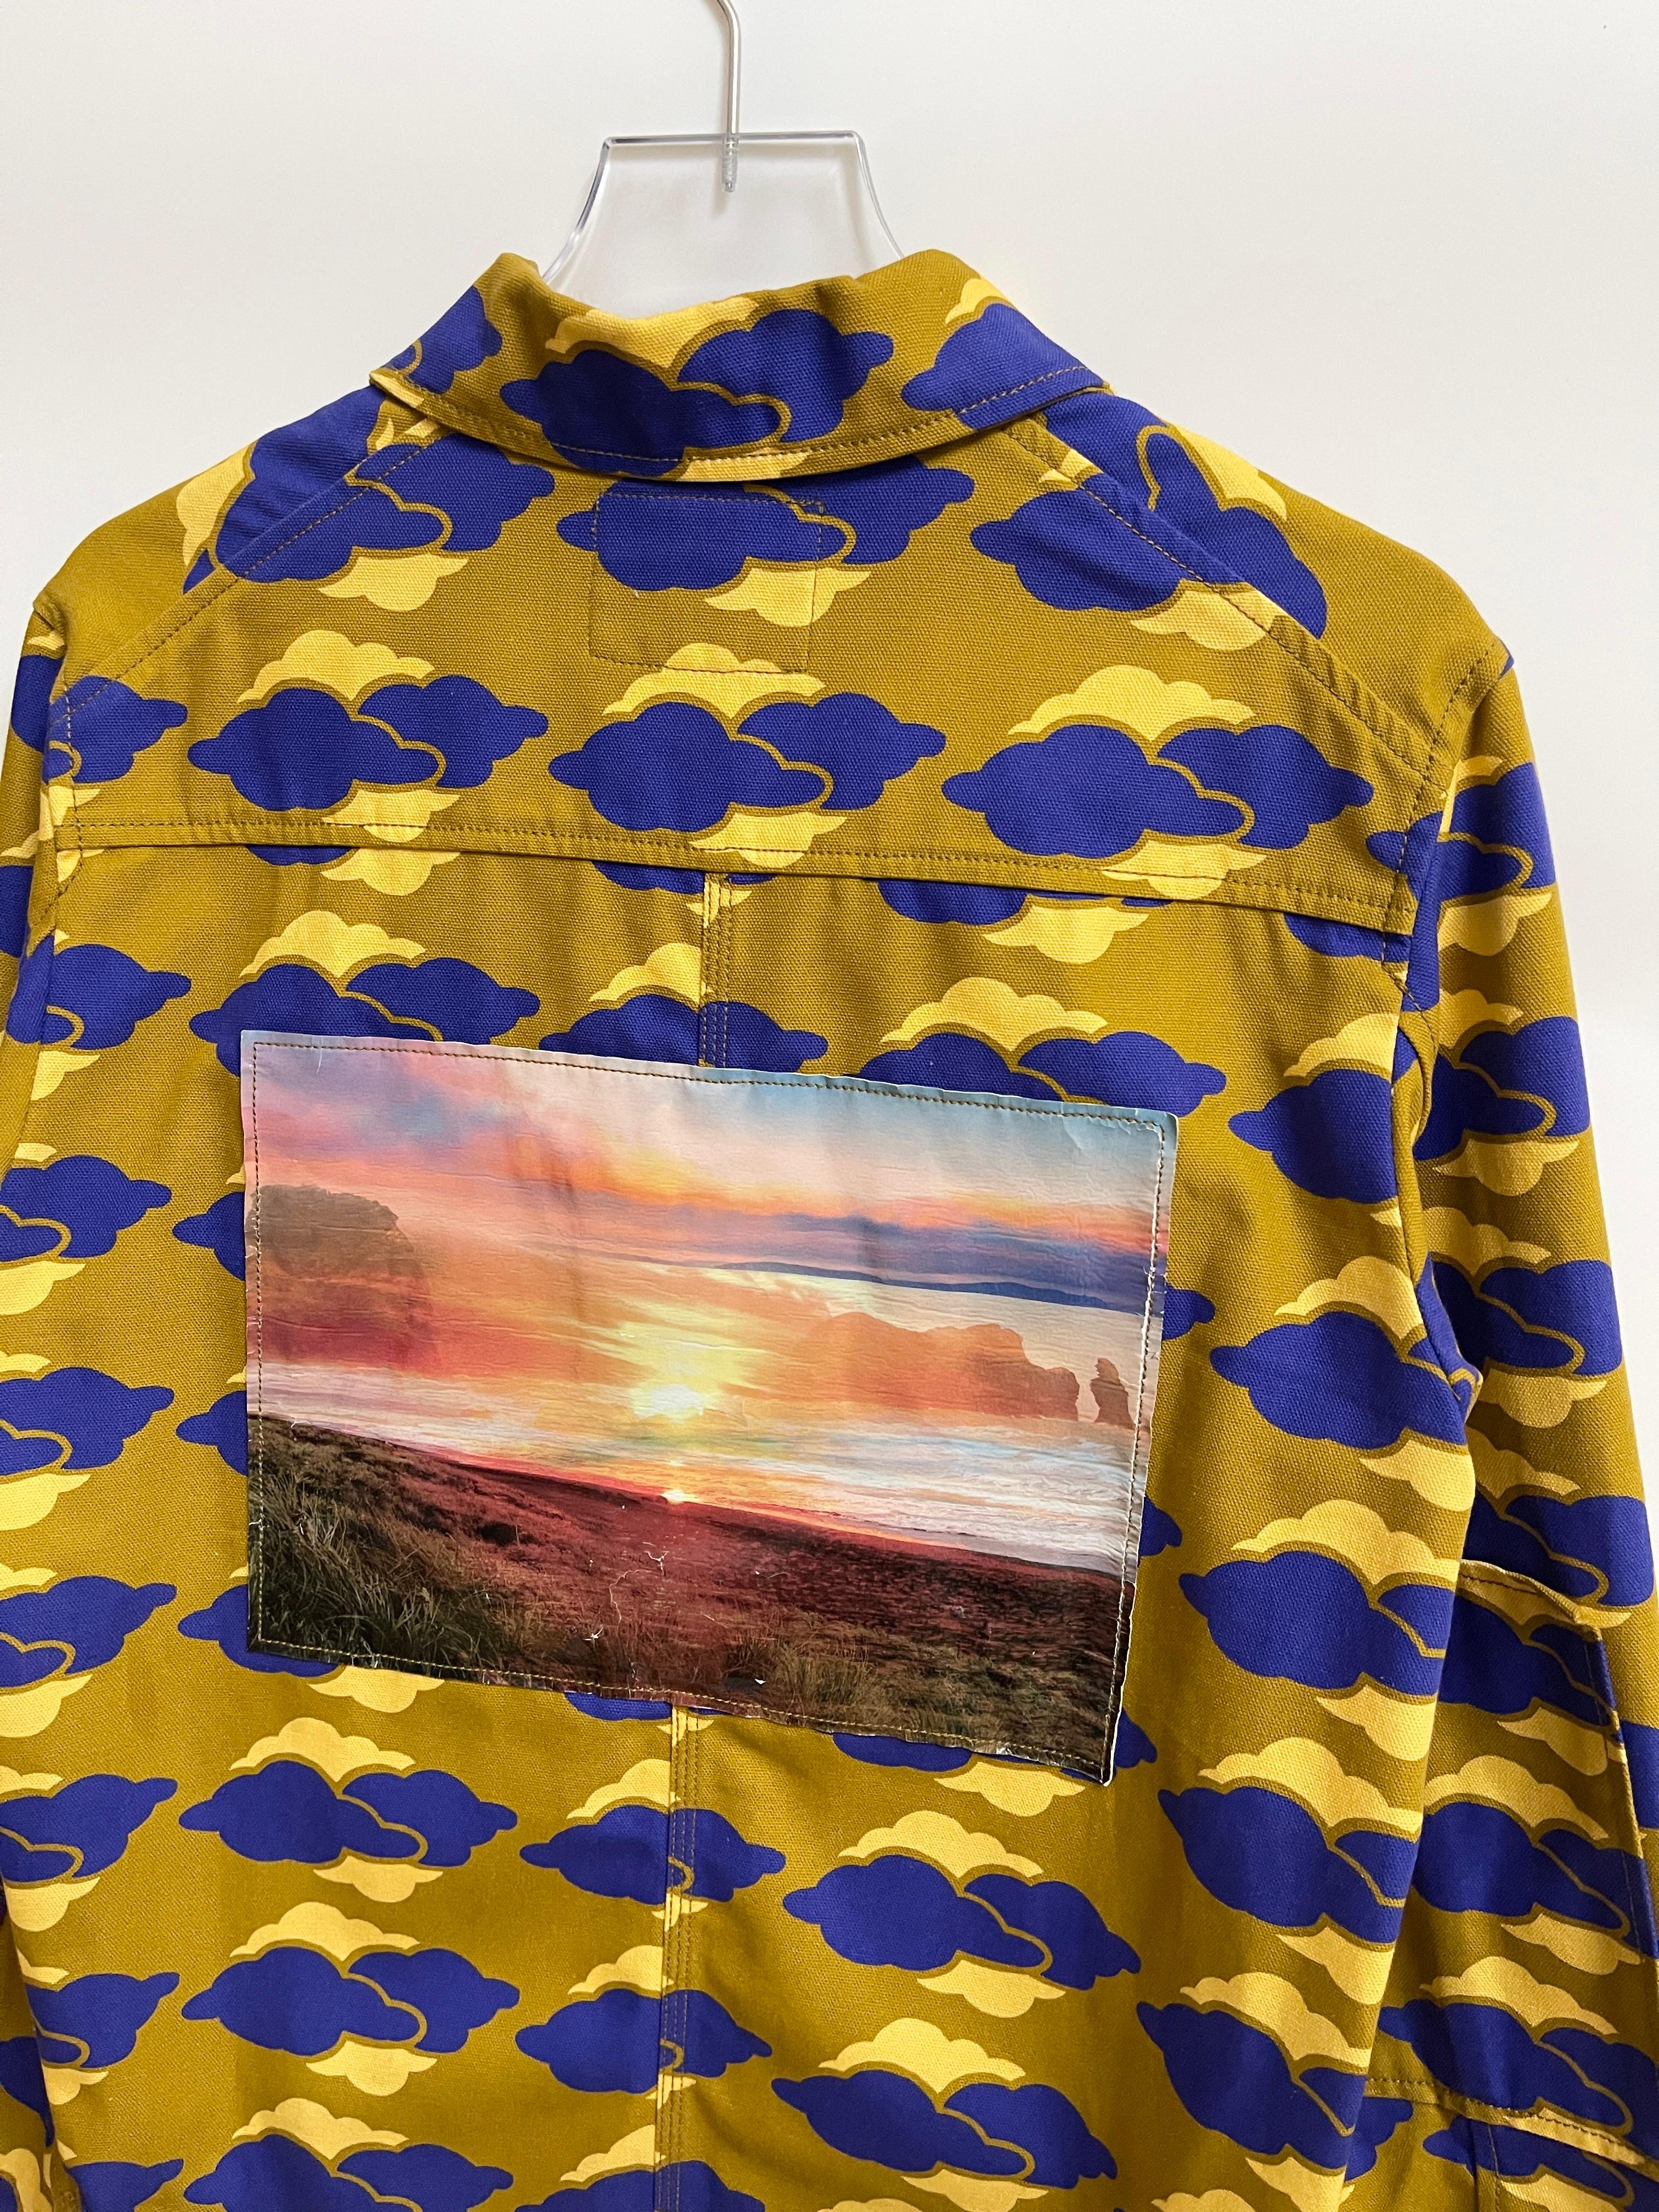 Acne Studios Landscape Painting Light Jacket For Sale 1